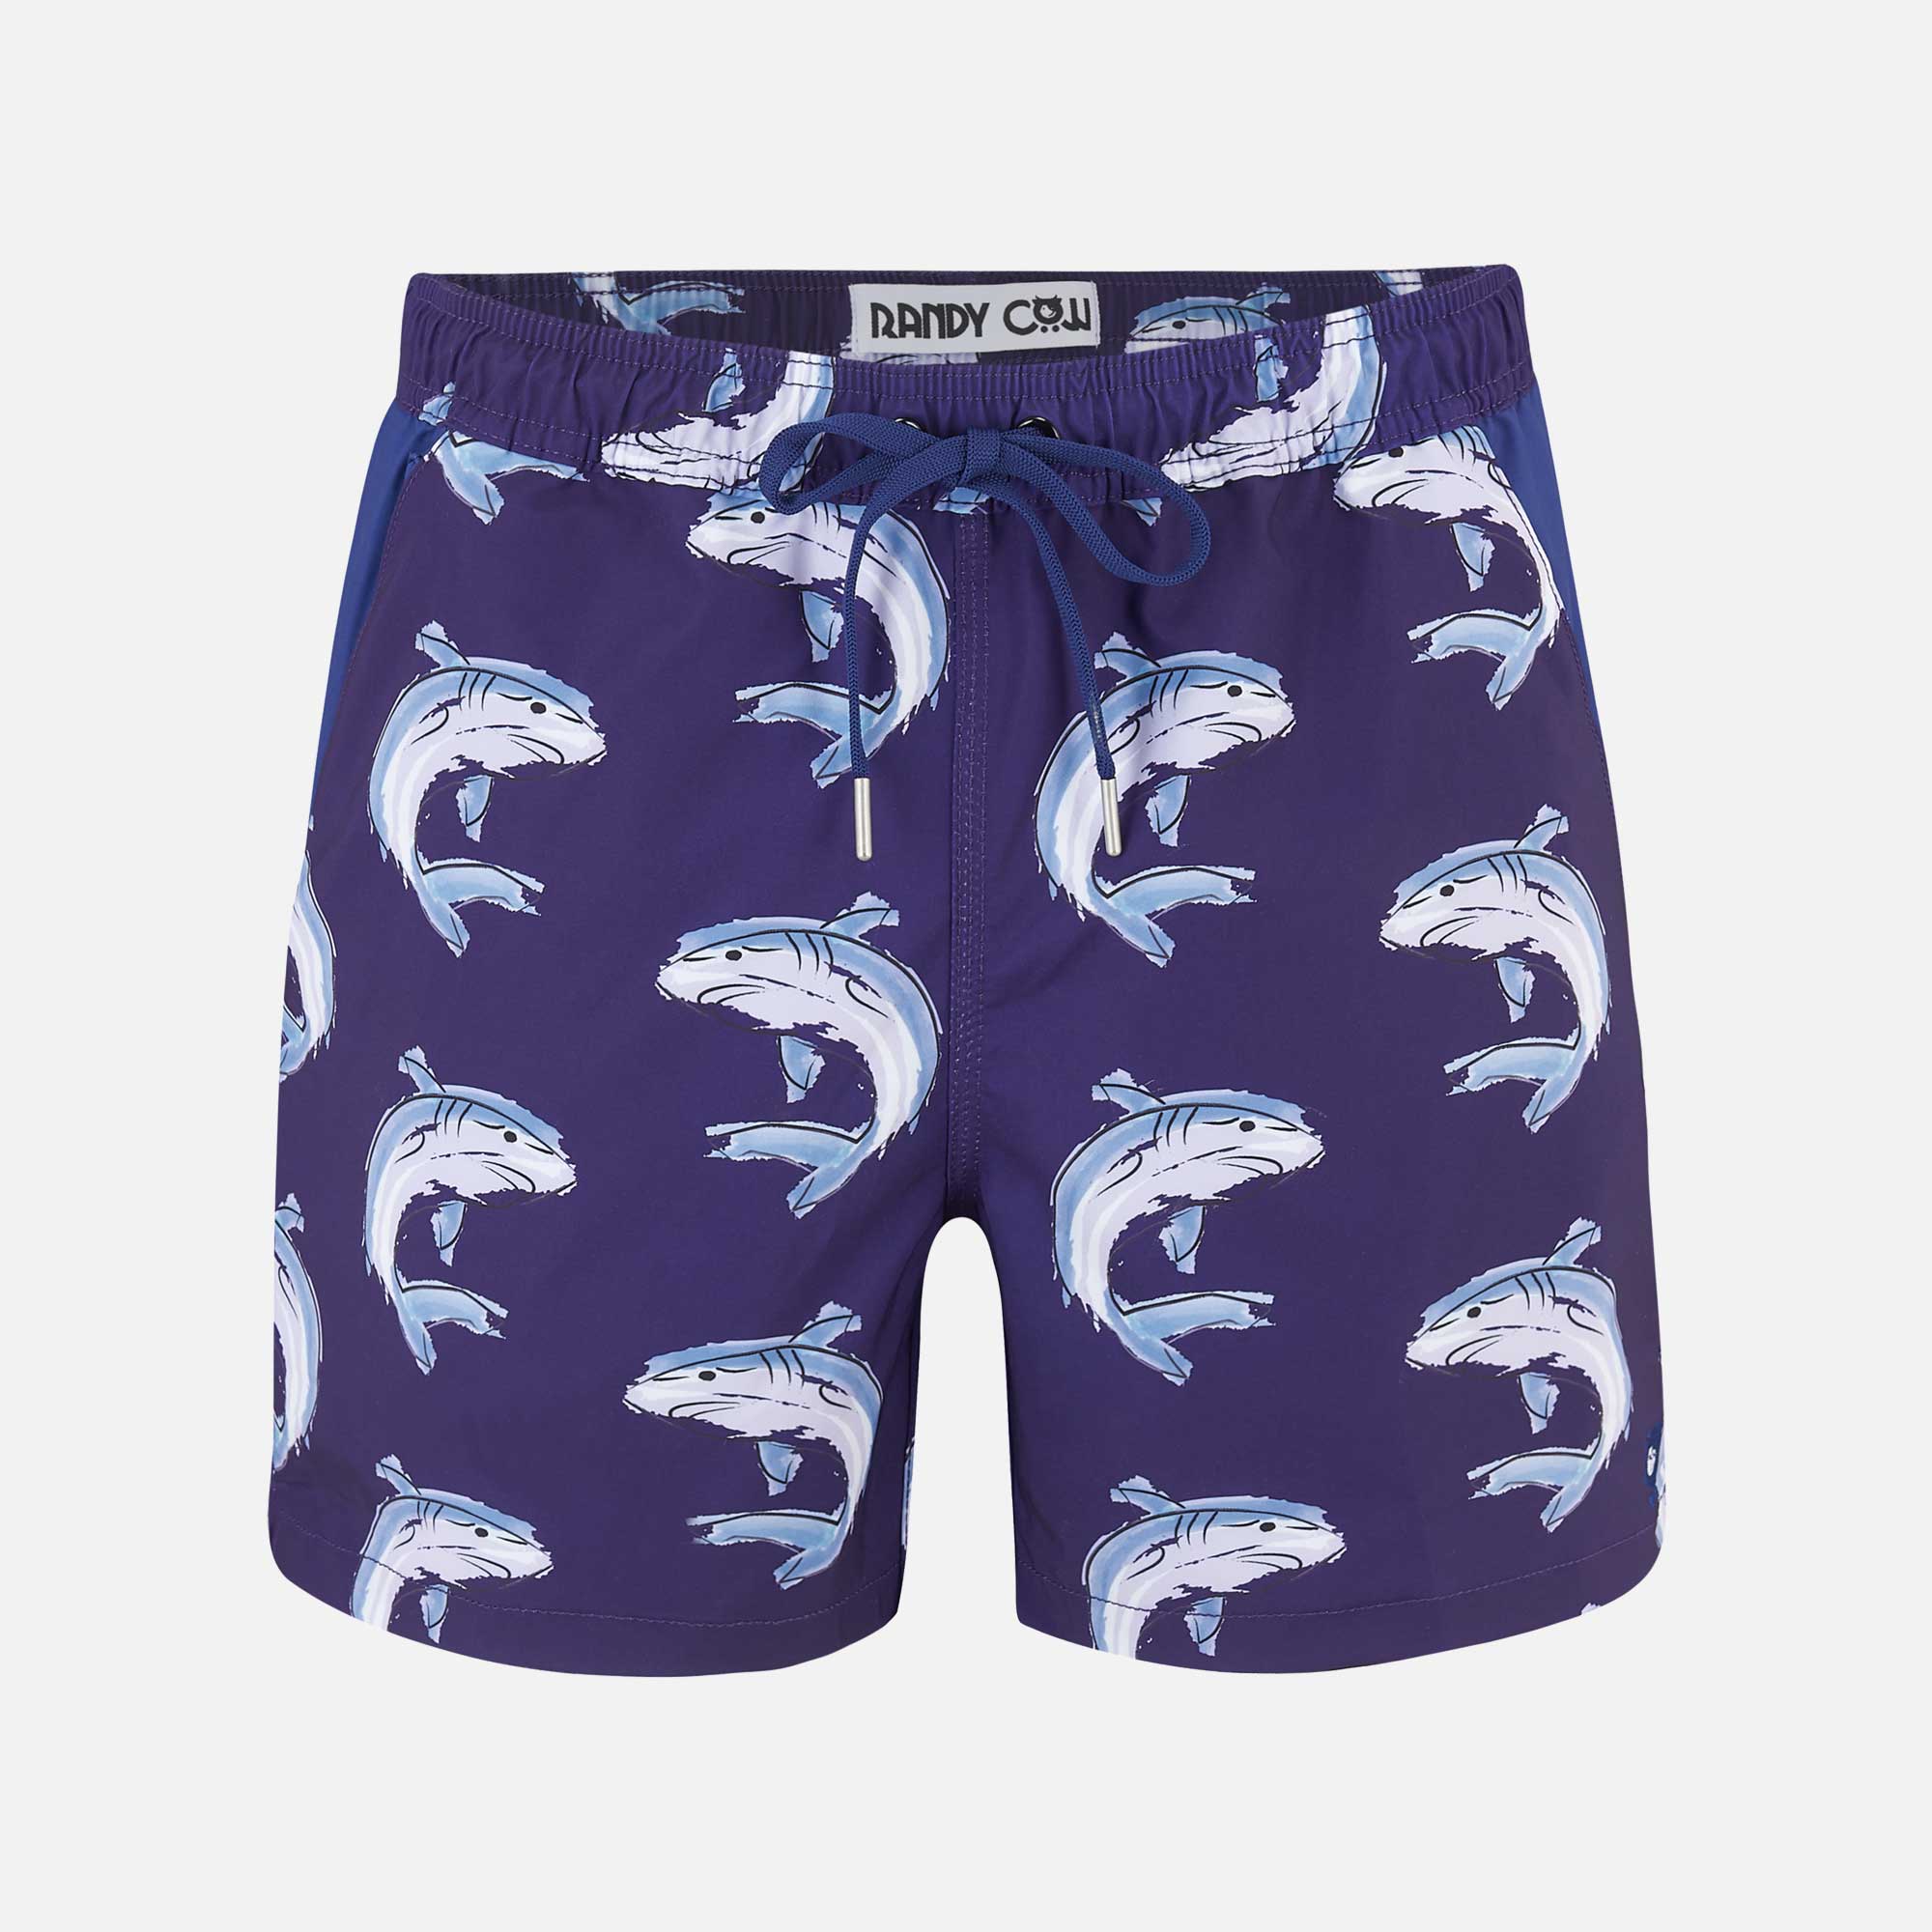 Sharks - Swim Shorts with MK1 Waterproof Pocket